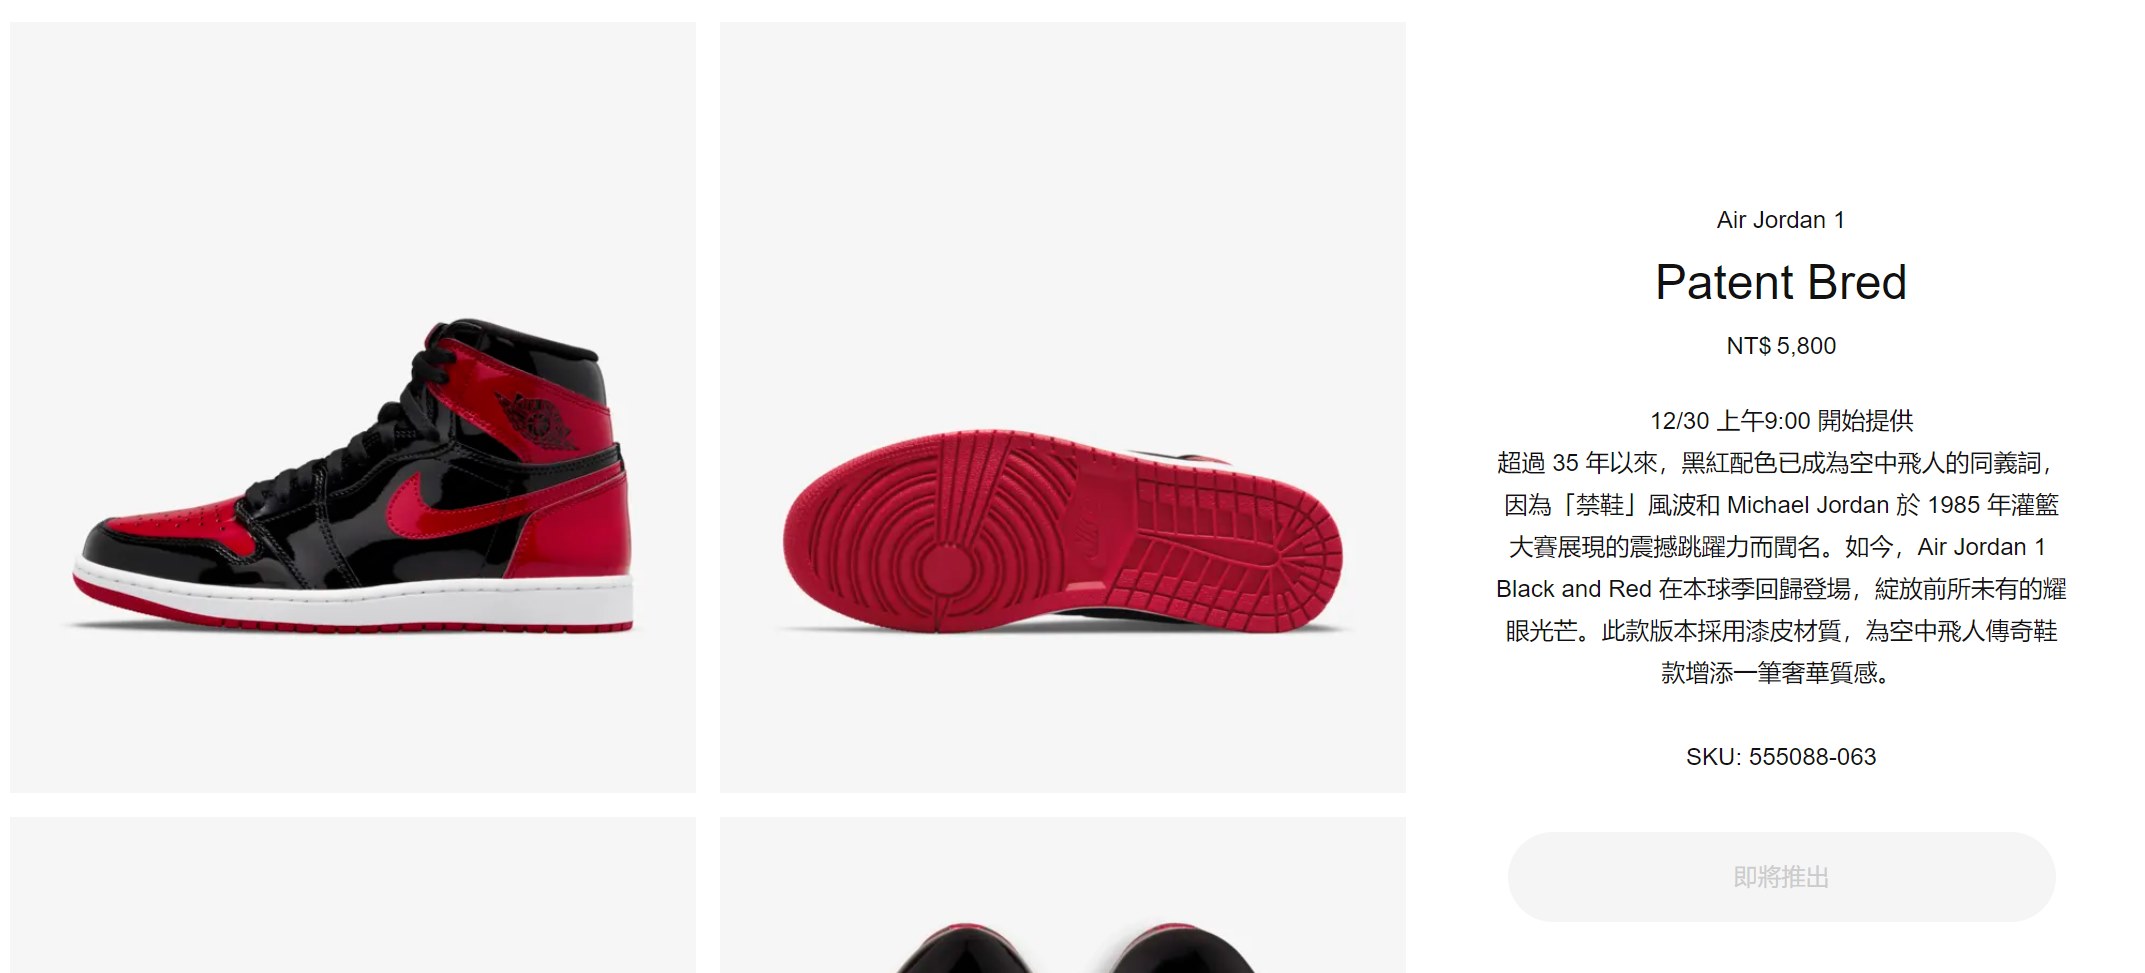 Air Jordan 1 Patent Bred 漆皮黑紅即將在台正式發售